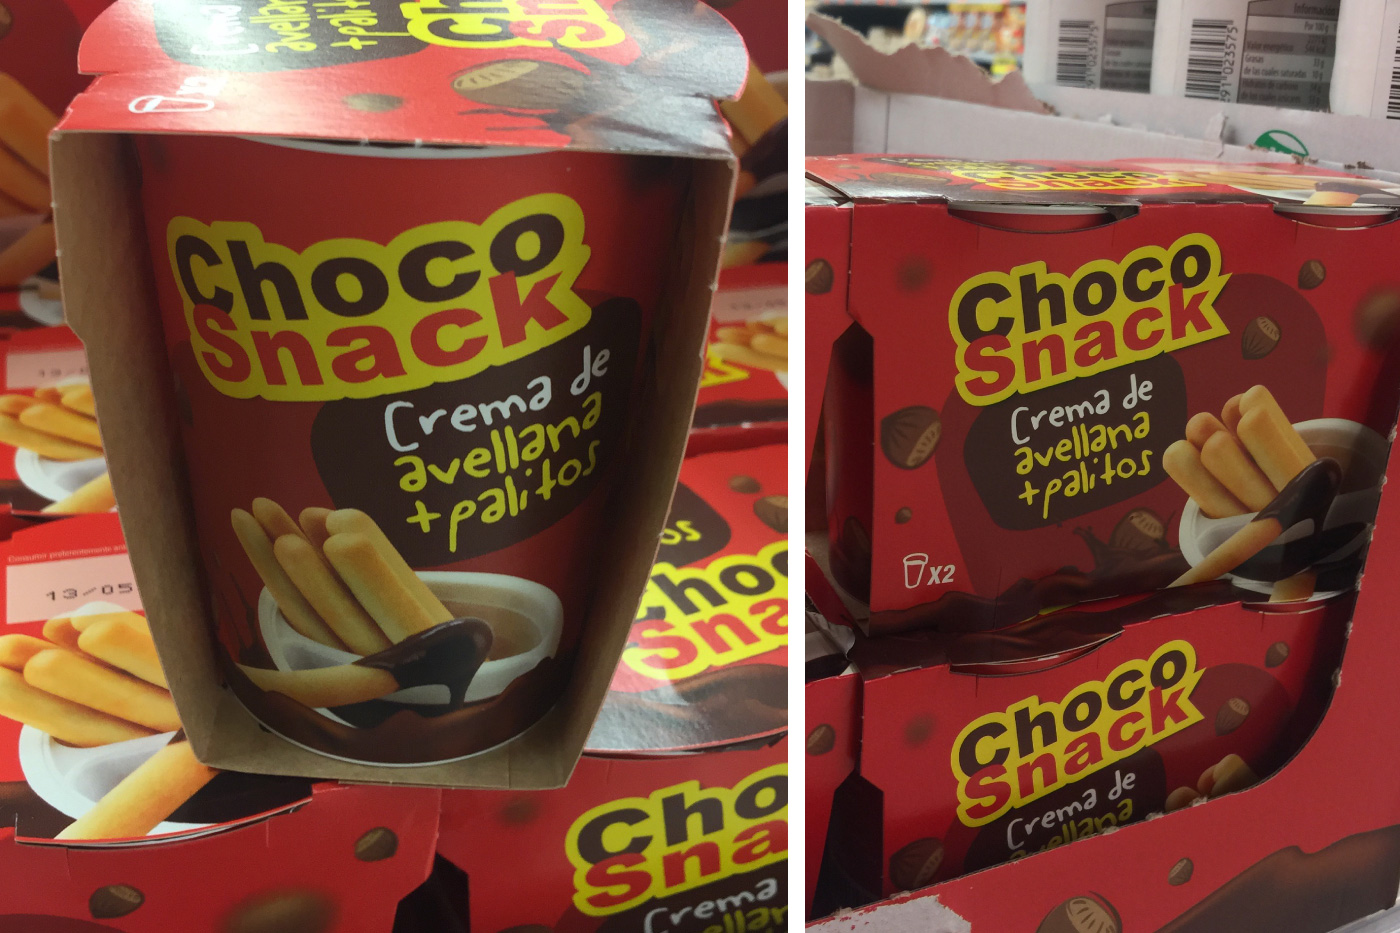 Choco snak avellana packaging dobleessa